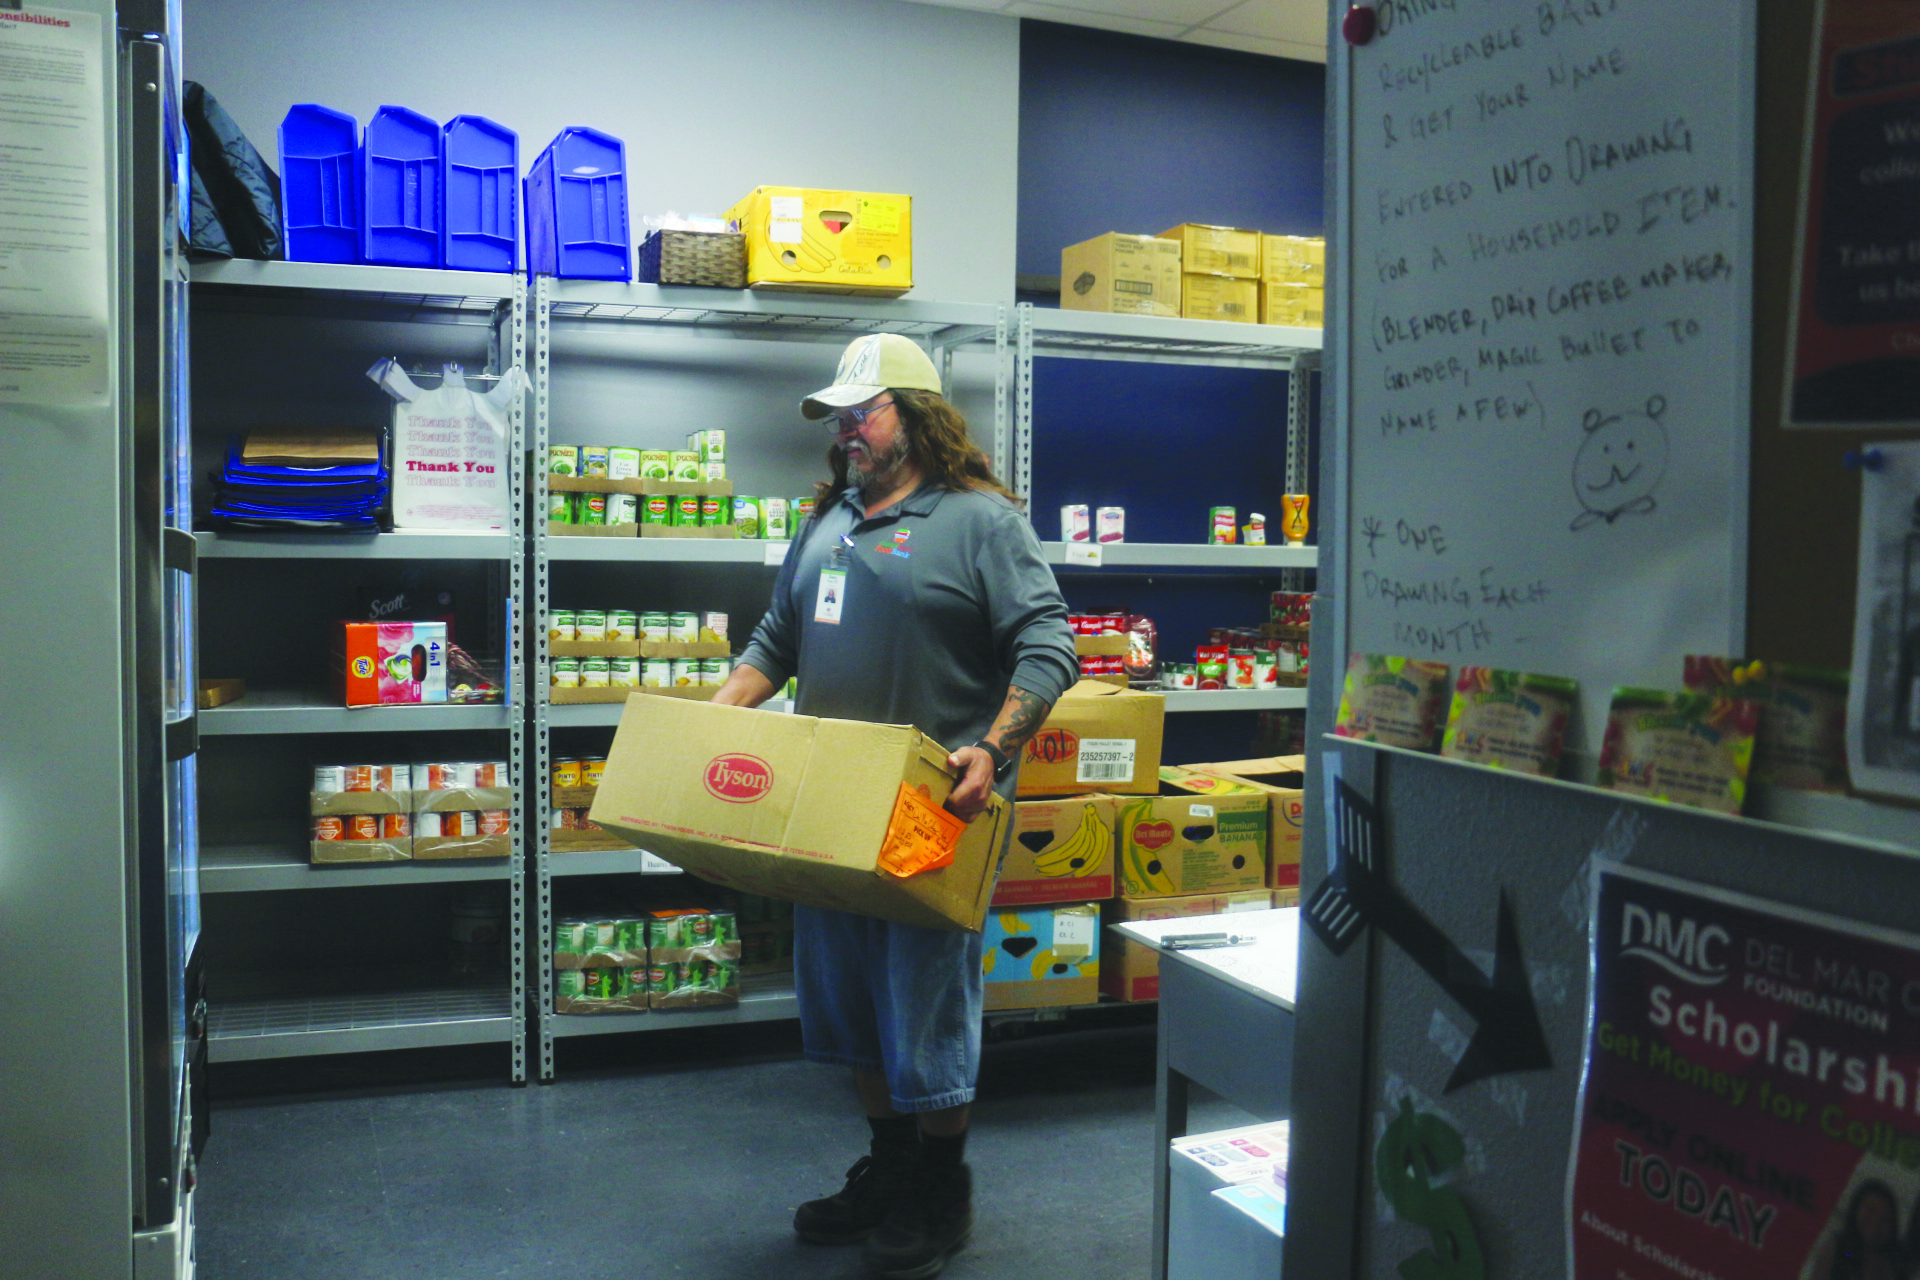 Group seeks items for food pantry